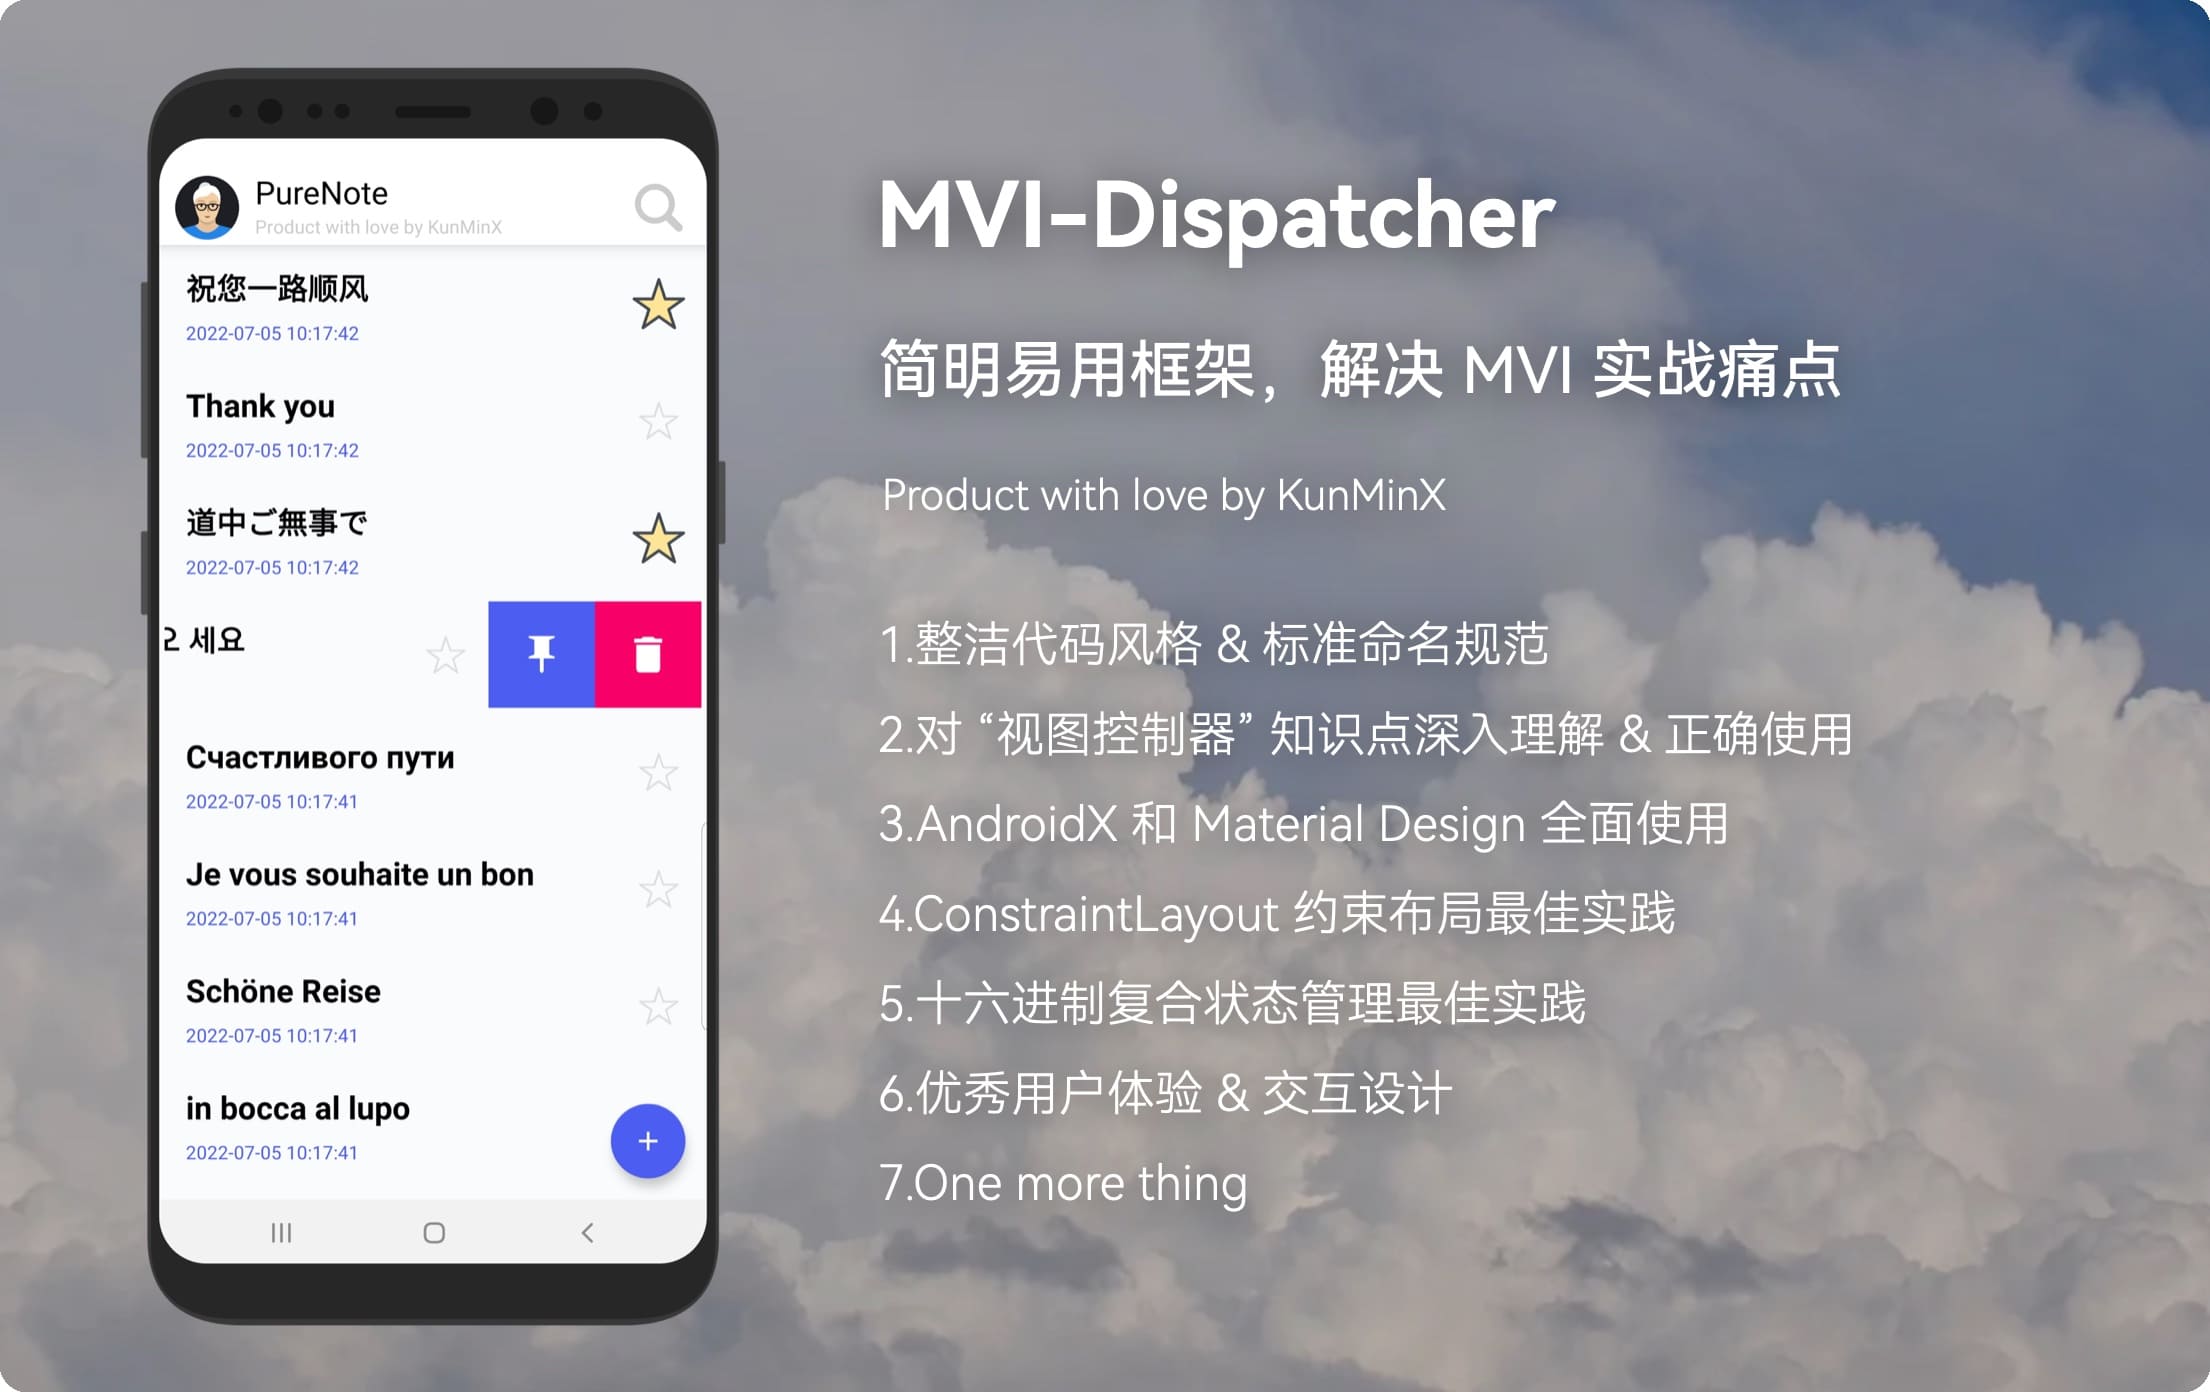 MVI-Dispatcher